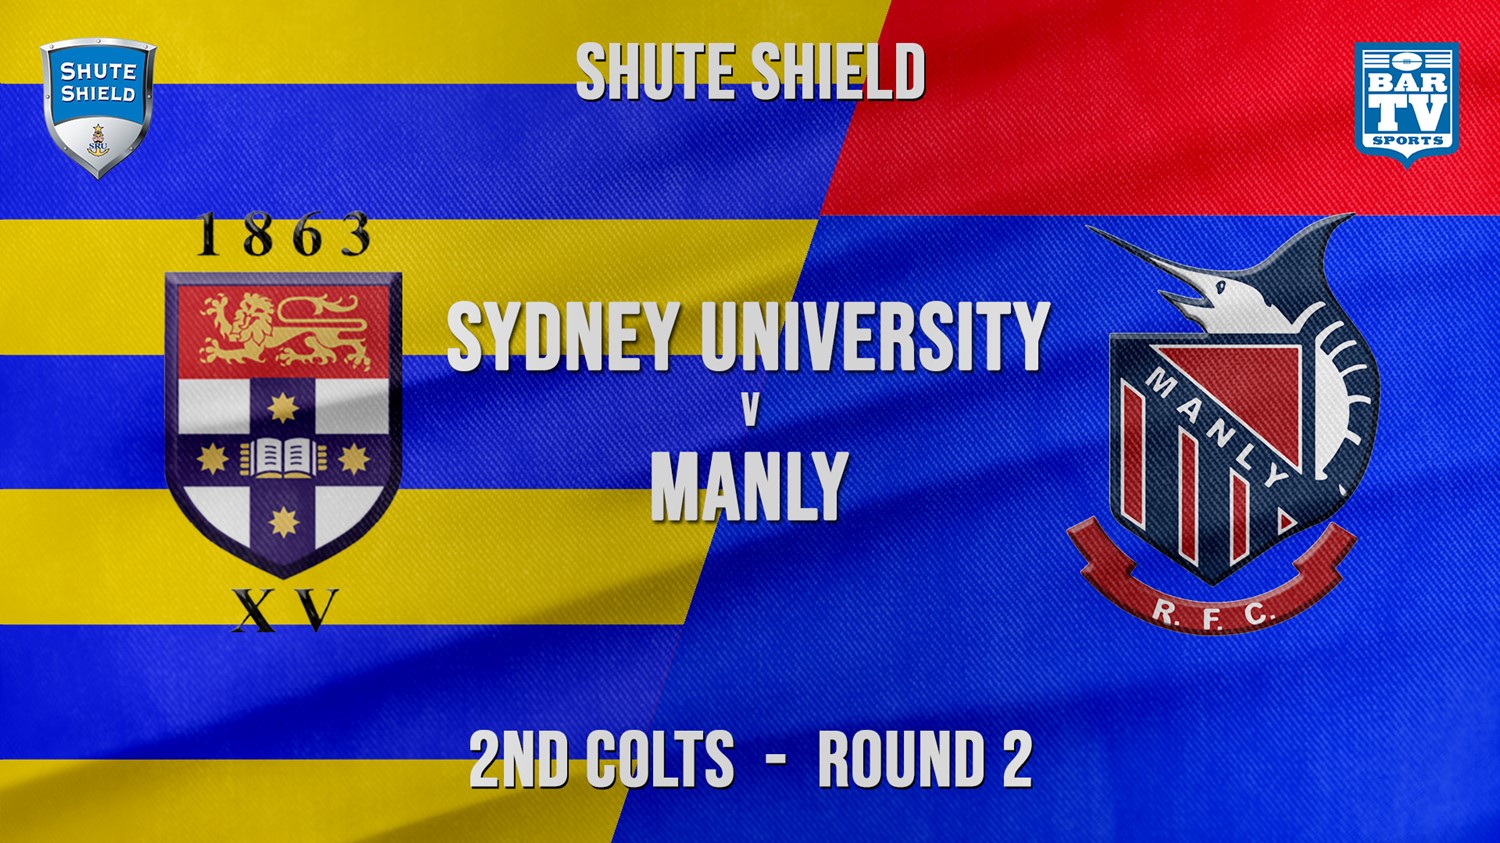 Shute Shield Round 2 - 2nd Colts - Sydney University v Manly Minigame Slate Image